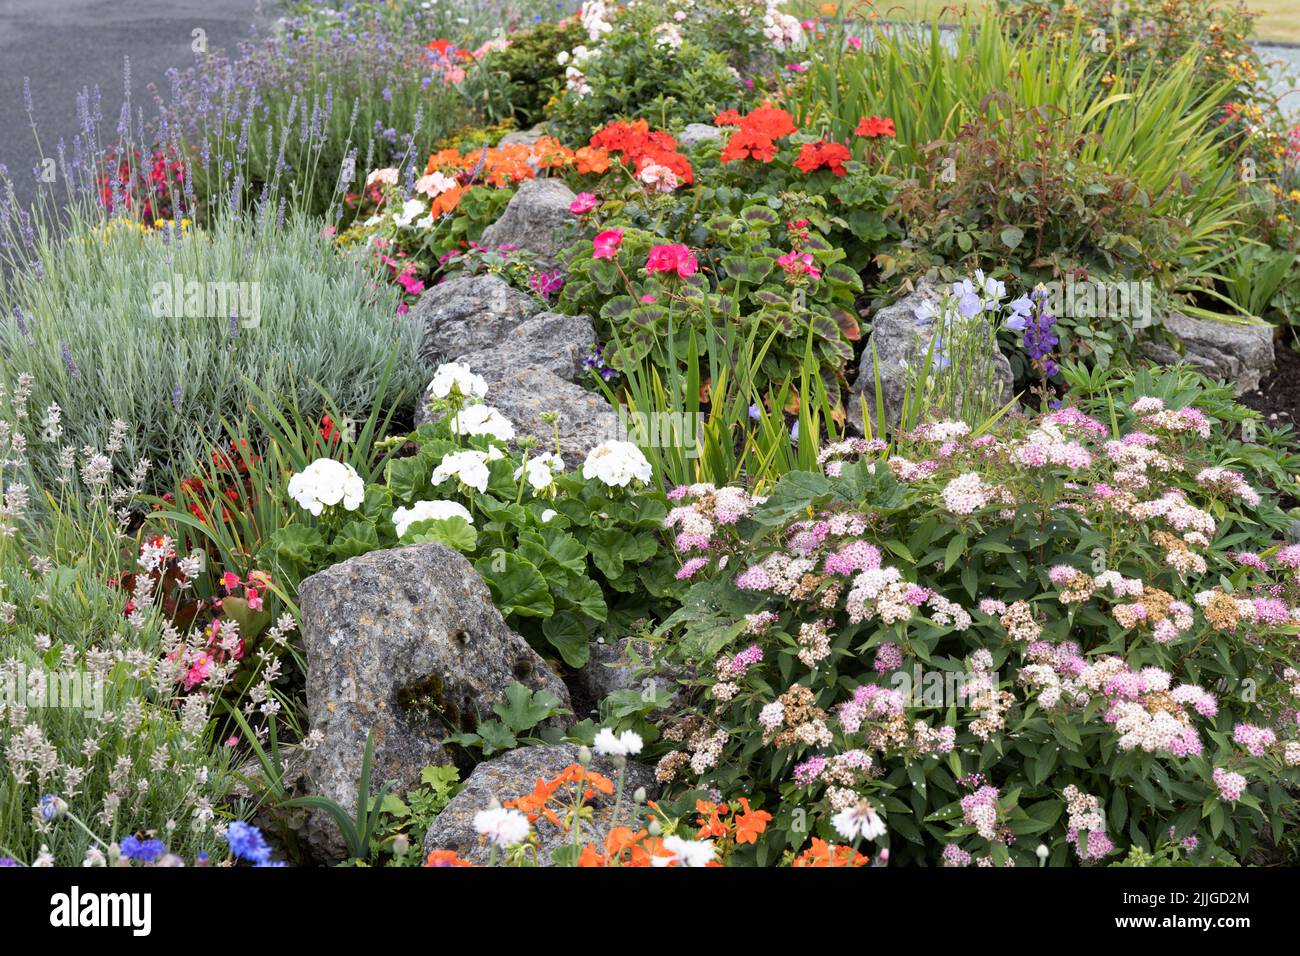 Flower rockery with lobelia, busy lizzie, night scented stock, candytuft, cornflowers, begonias, lavender, geranium, canterbury bell, spirea Stock Photo